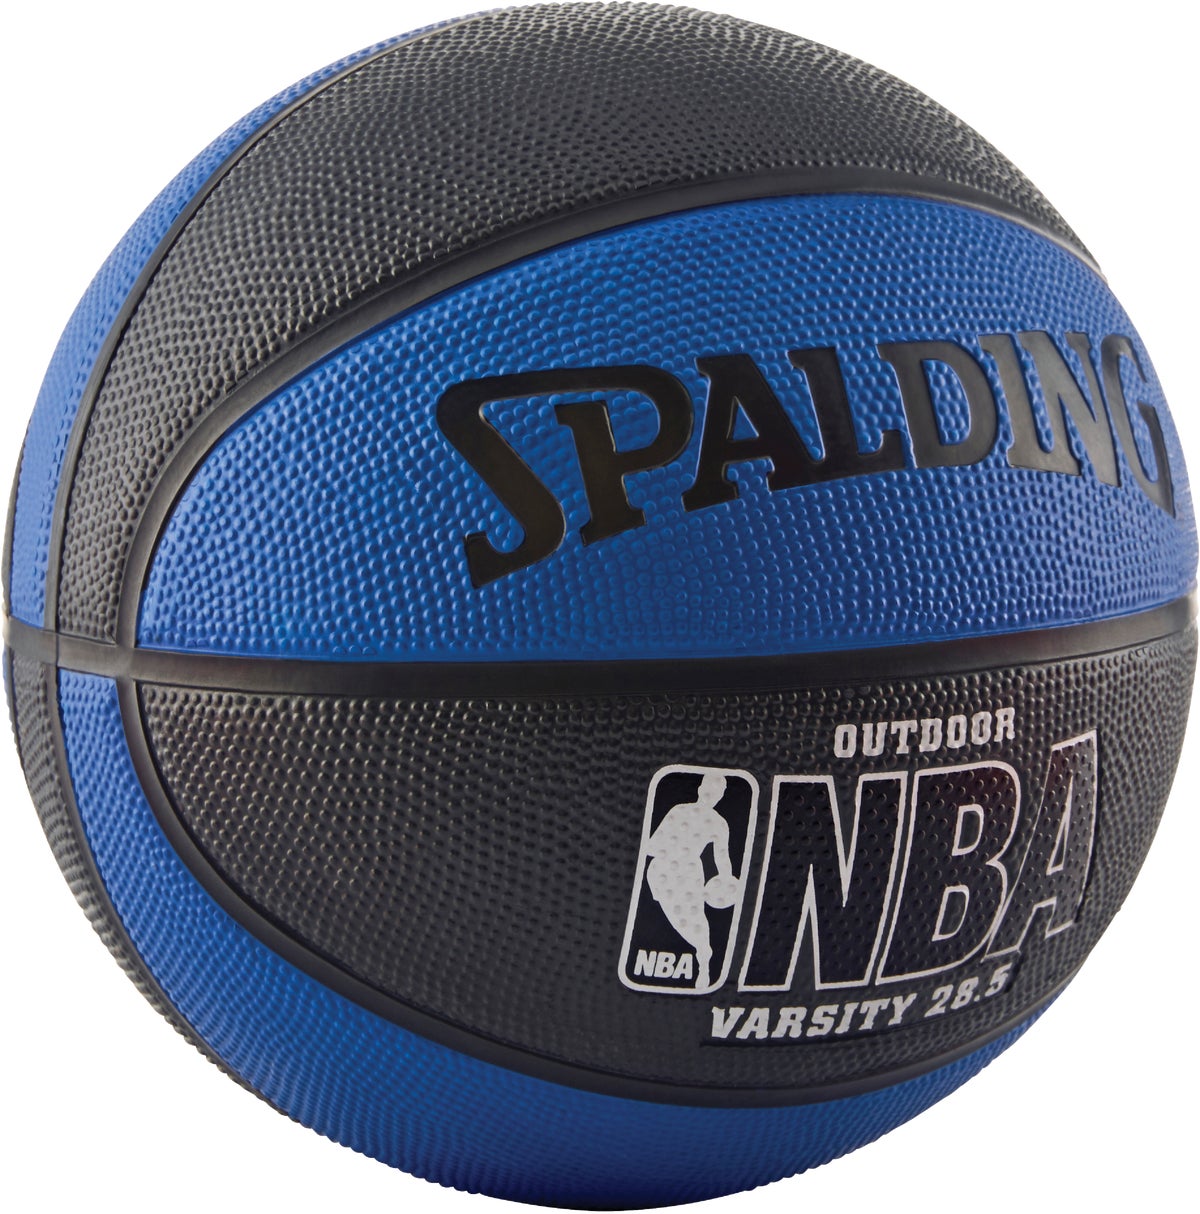 Buy Spalding NBA Varsity Basketball Size 6